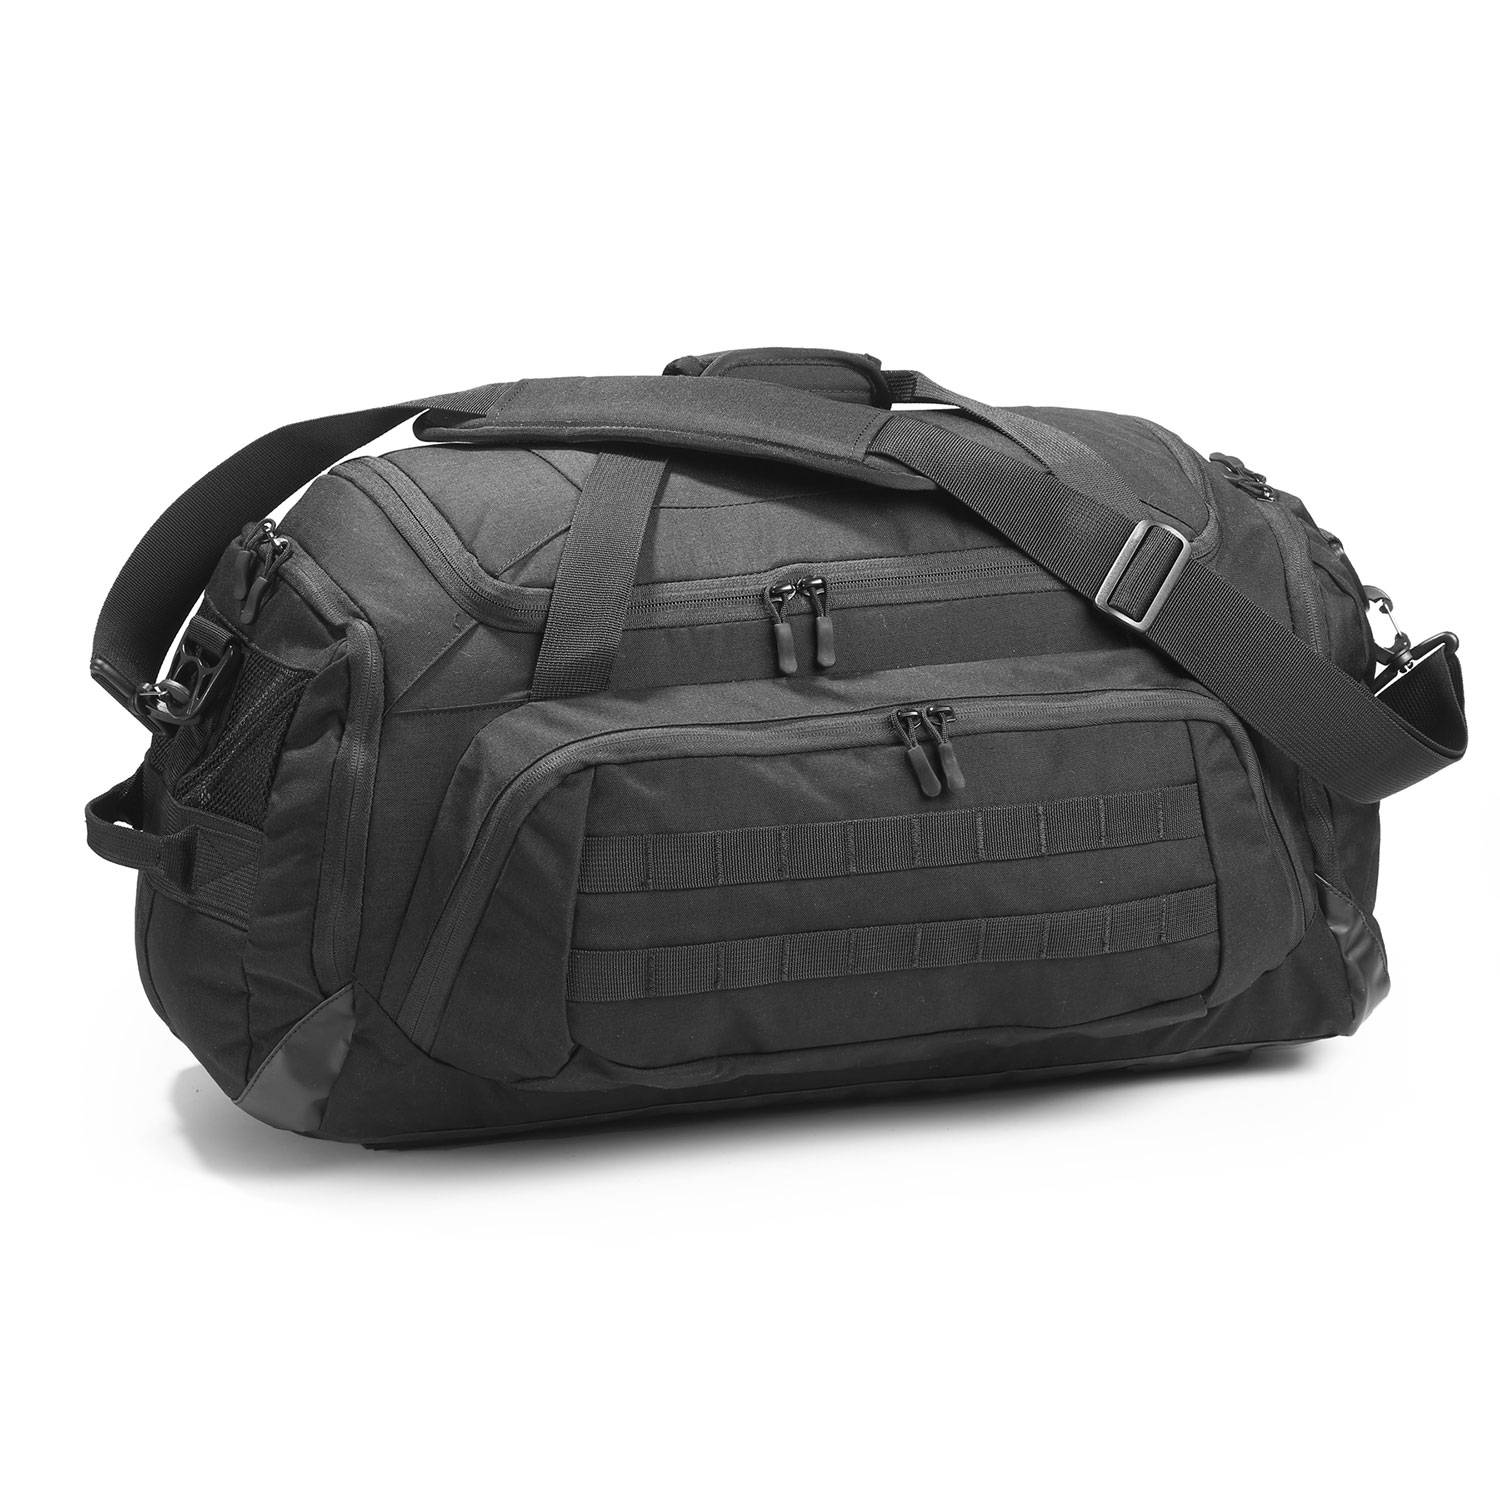 Cannae Transport Tactical Duffle Bag